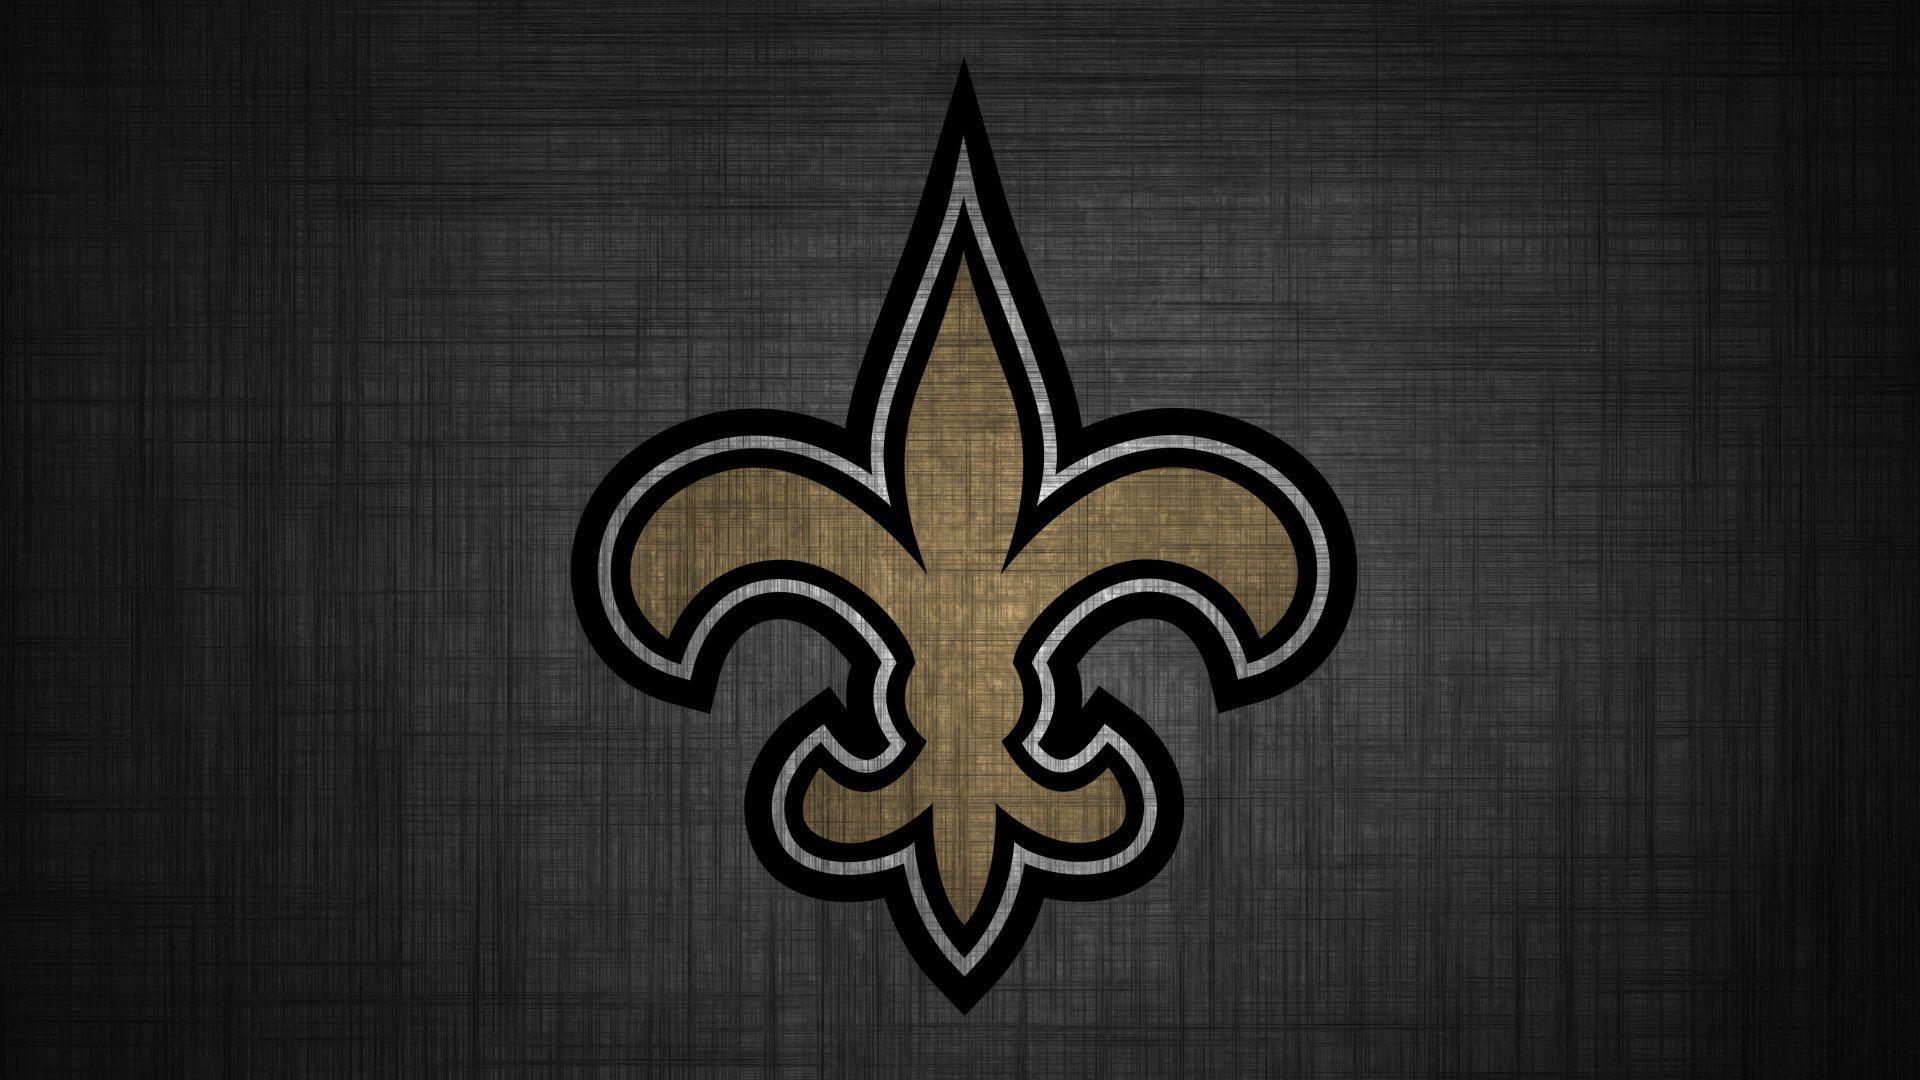 HD New Orleans Saints Wallpaper HDWallpaperSets Com Download